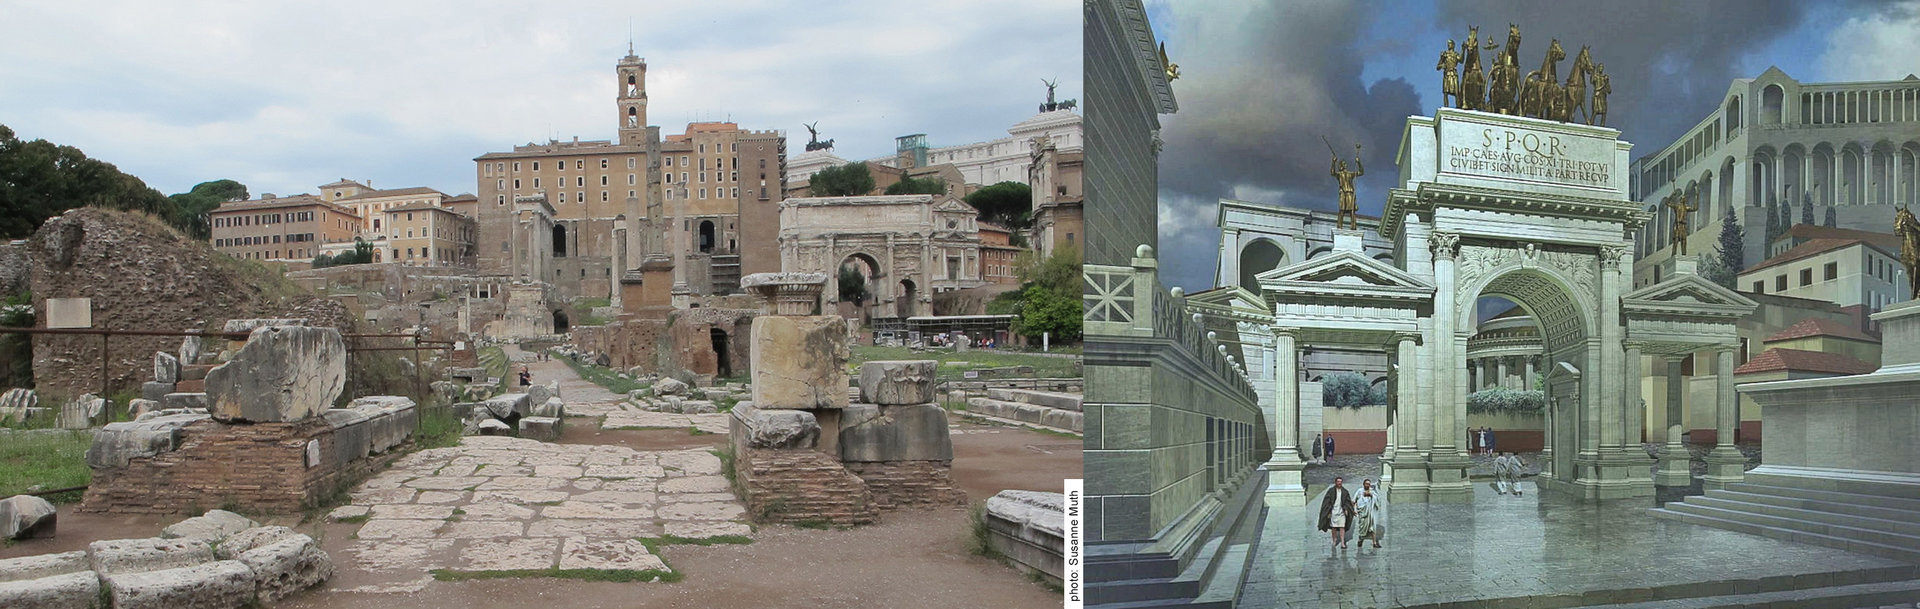 Arch of Augustus.jpg